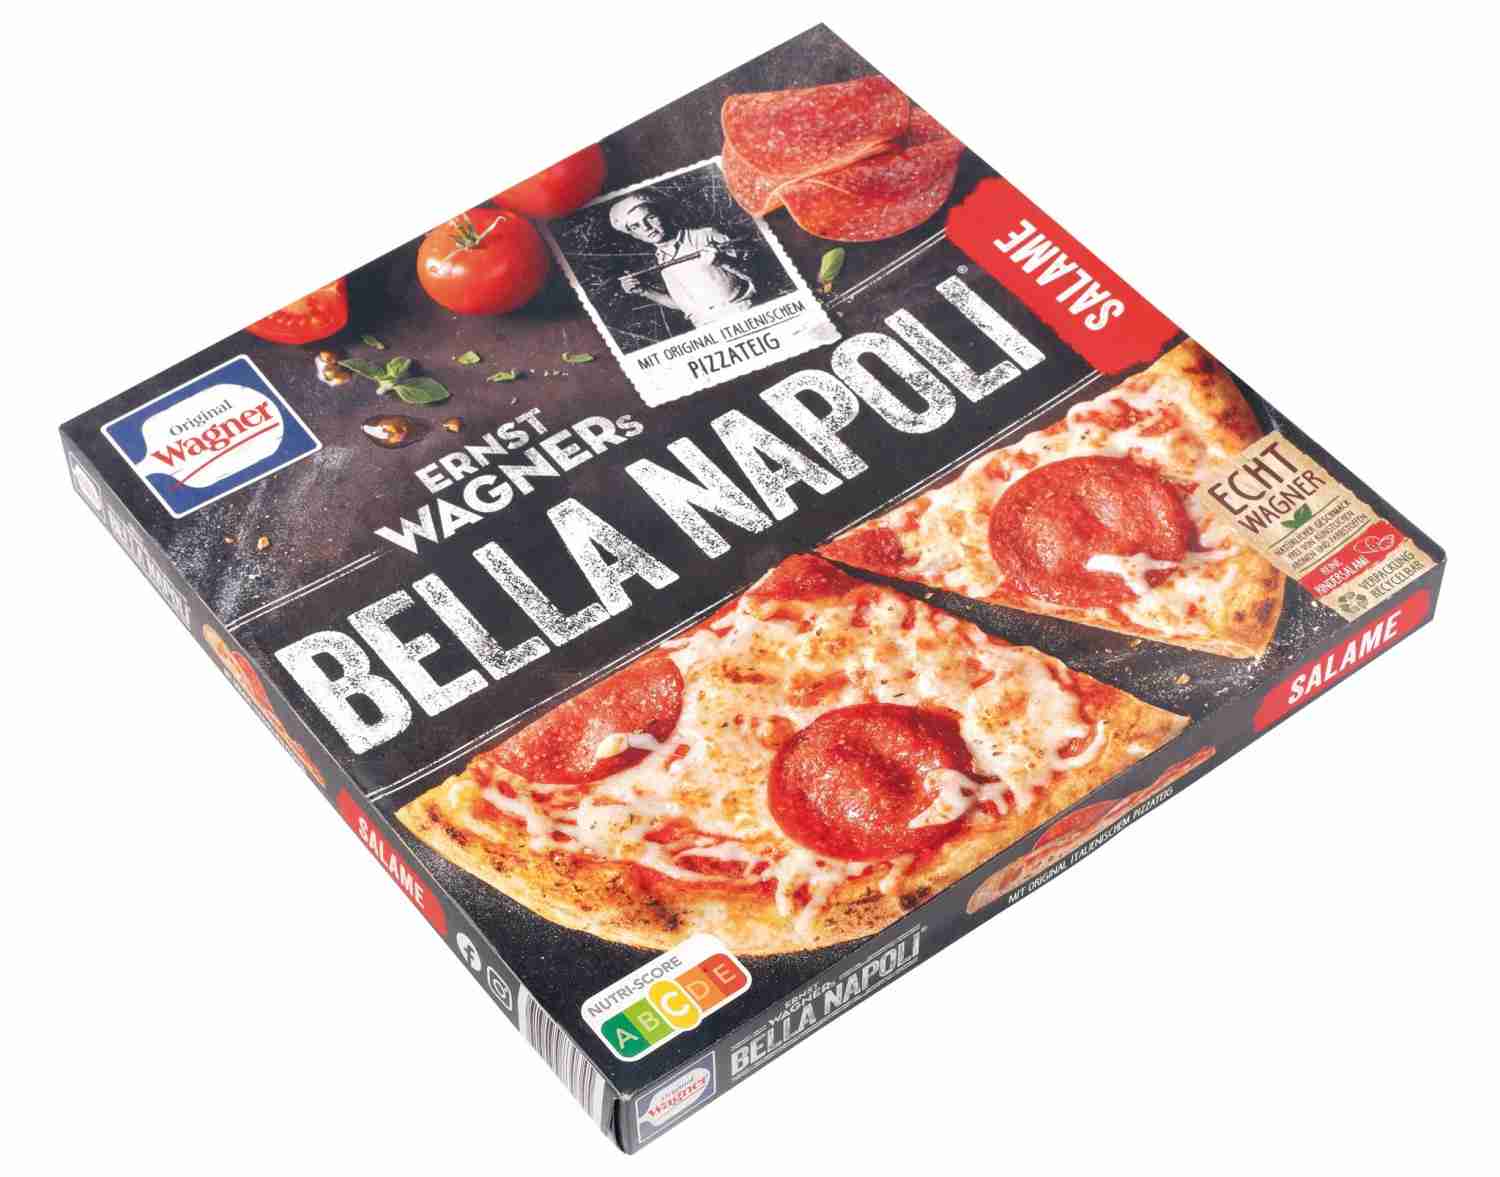 Tiefkühl-Pizza Wagner Ernst Wagners Bella Napoli Salame im Test, Bild 9